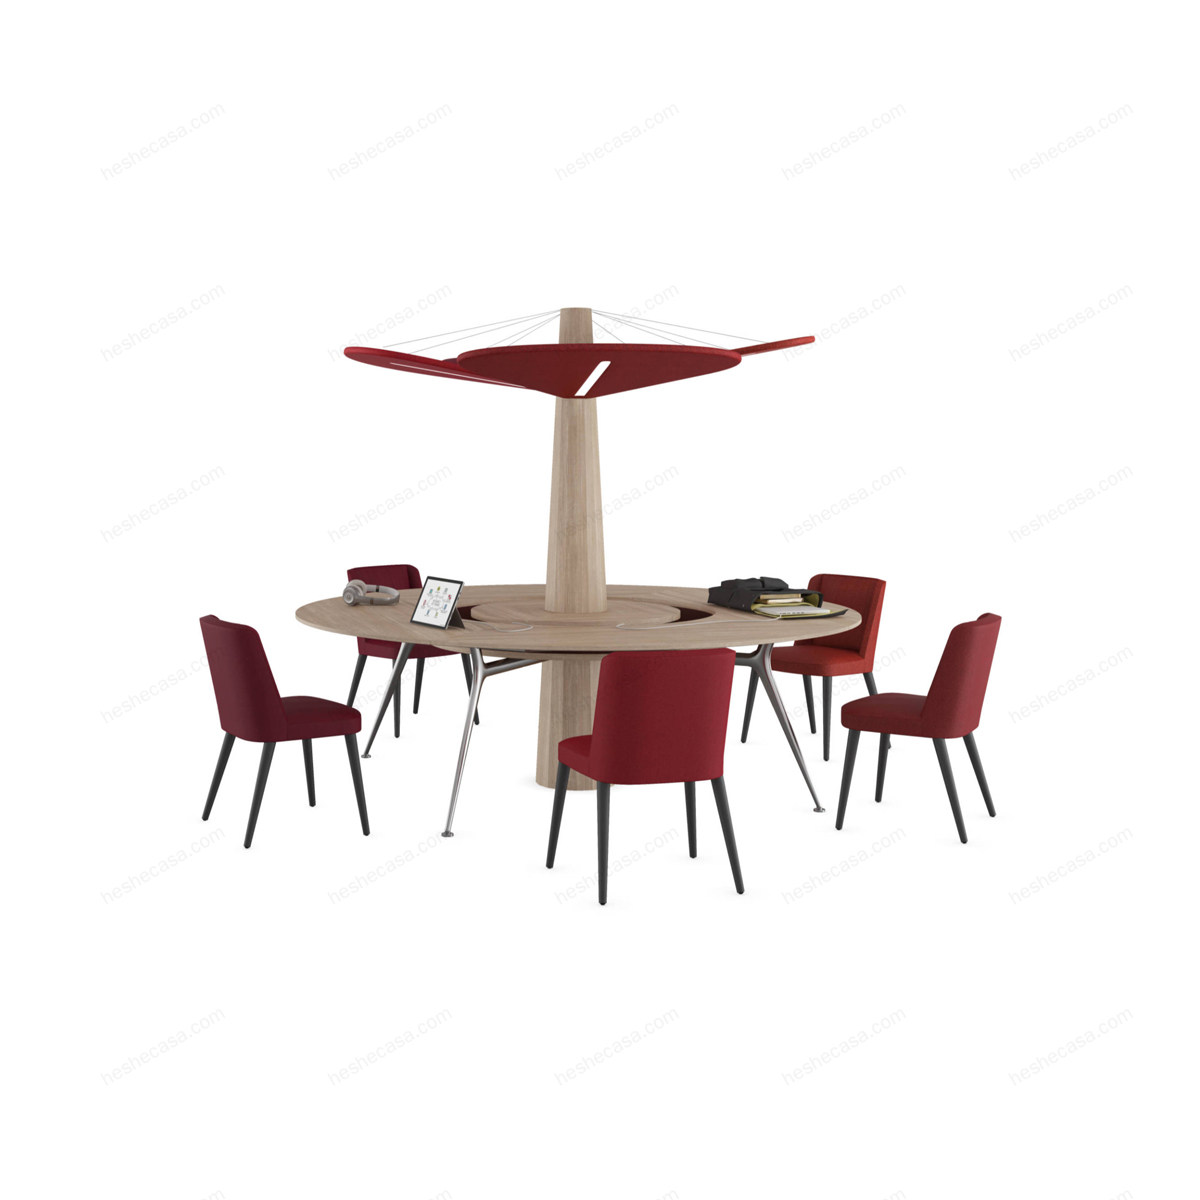 Baobab - Sharing Table会议桌